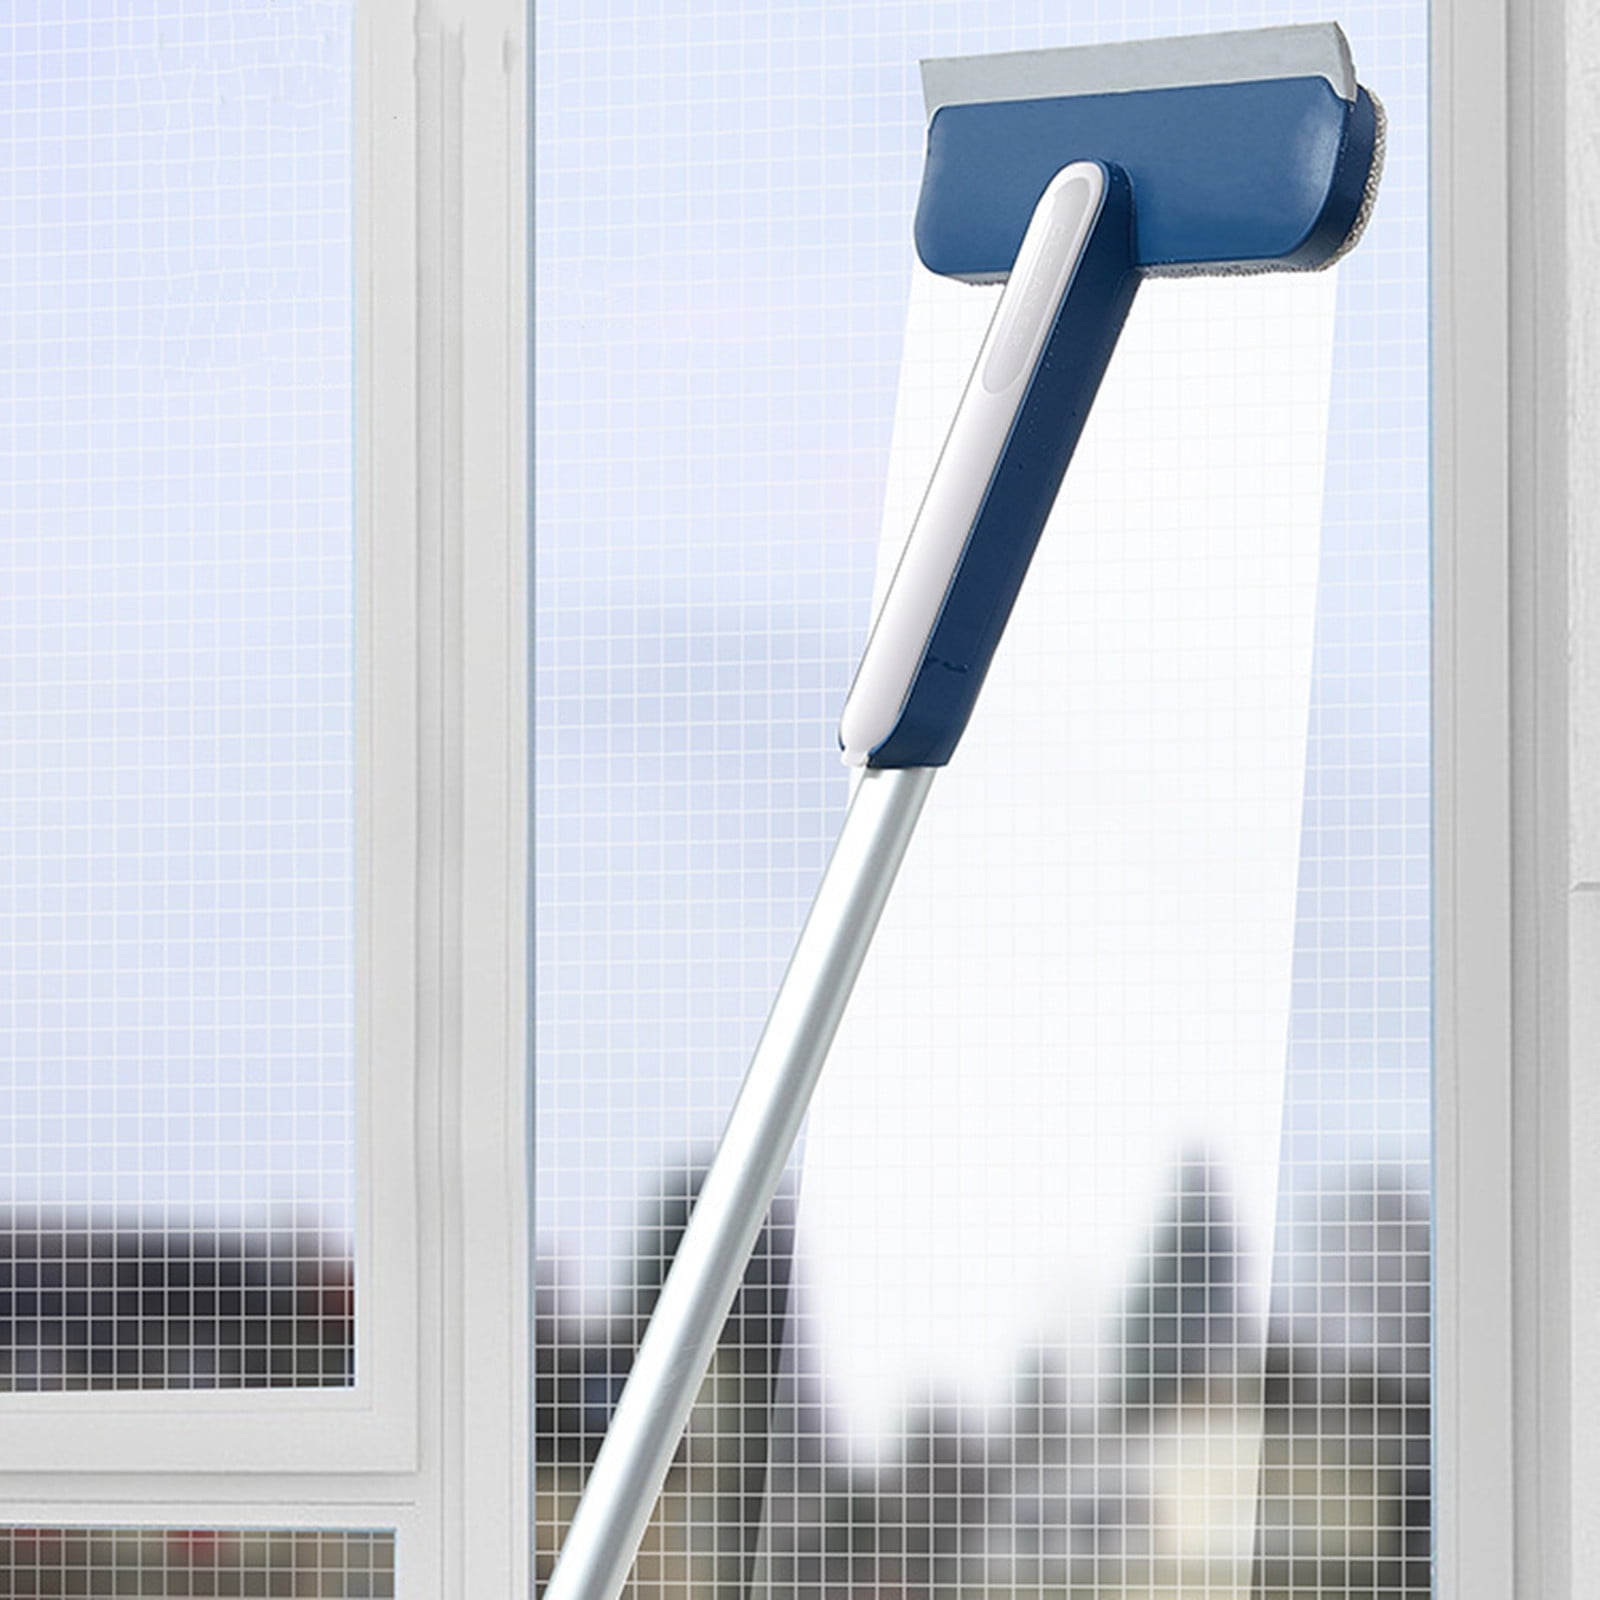  Window Screen Cleaner Tool, Window Screen Cleaning Brush, 5 in  1 Window Cleaning Kit: Window Cleaning Brush, Window Cleaning Squeegee Kit,  Window Track Cleaning Tools, Window Seal Cleaner(Blue) : Health 